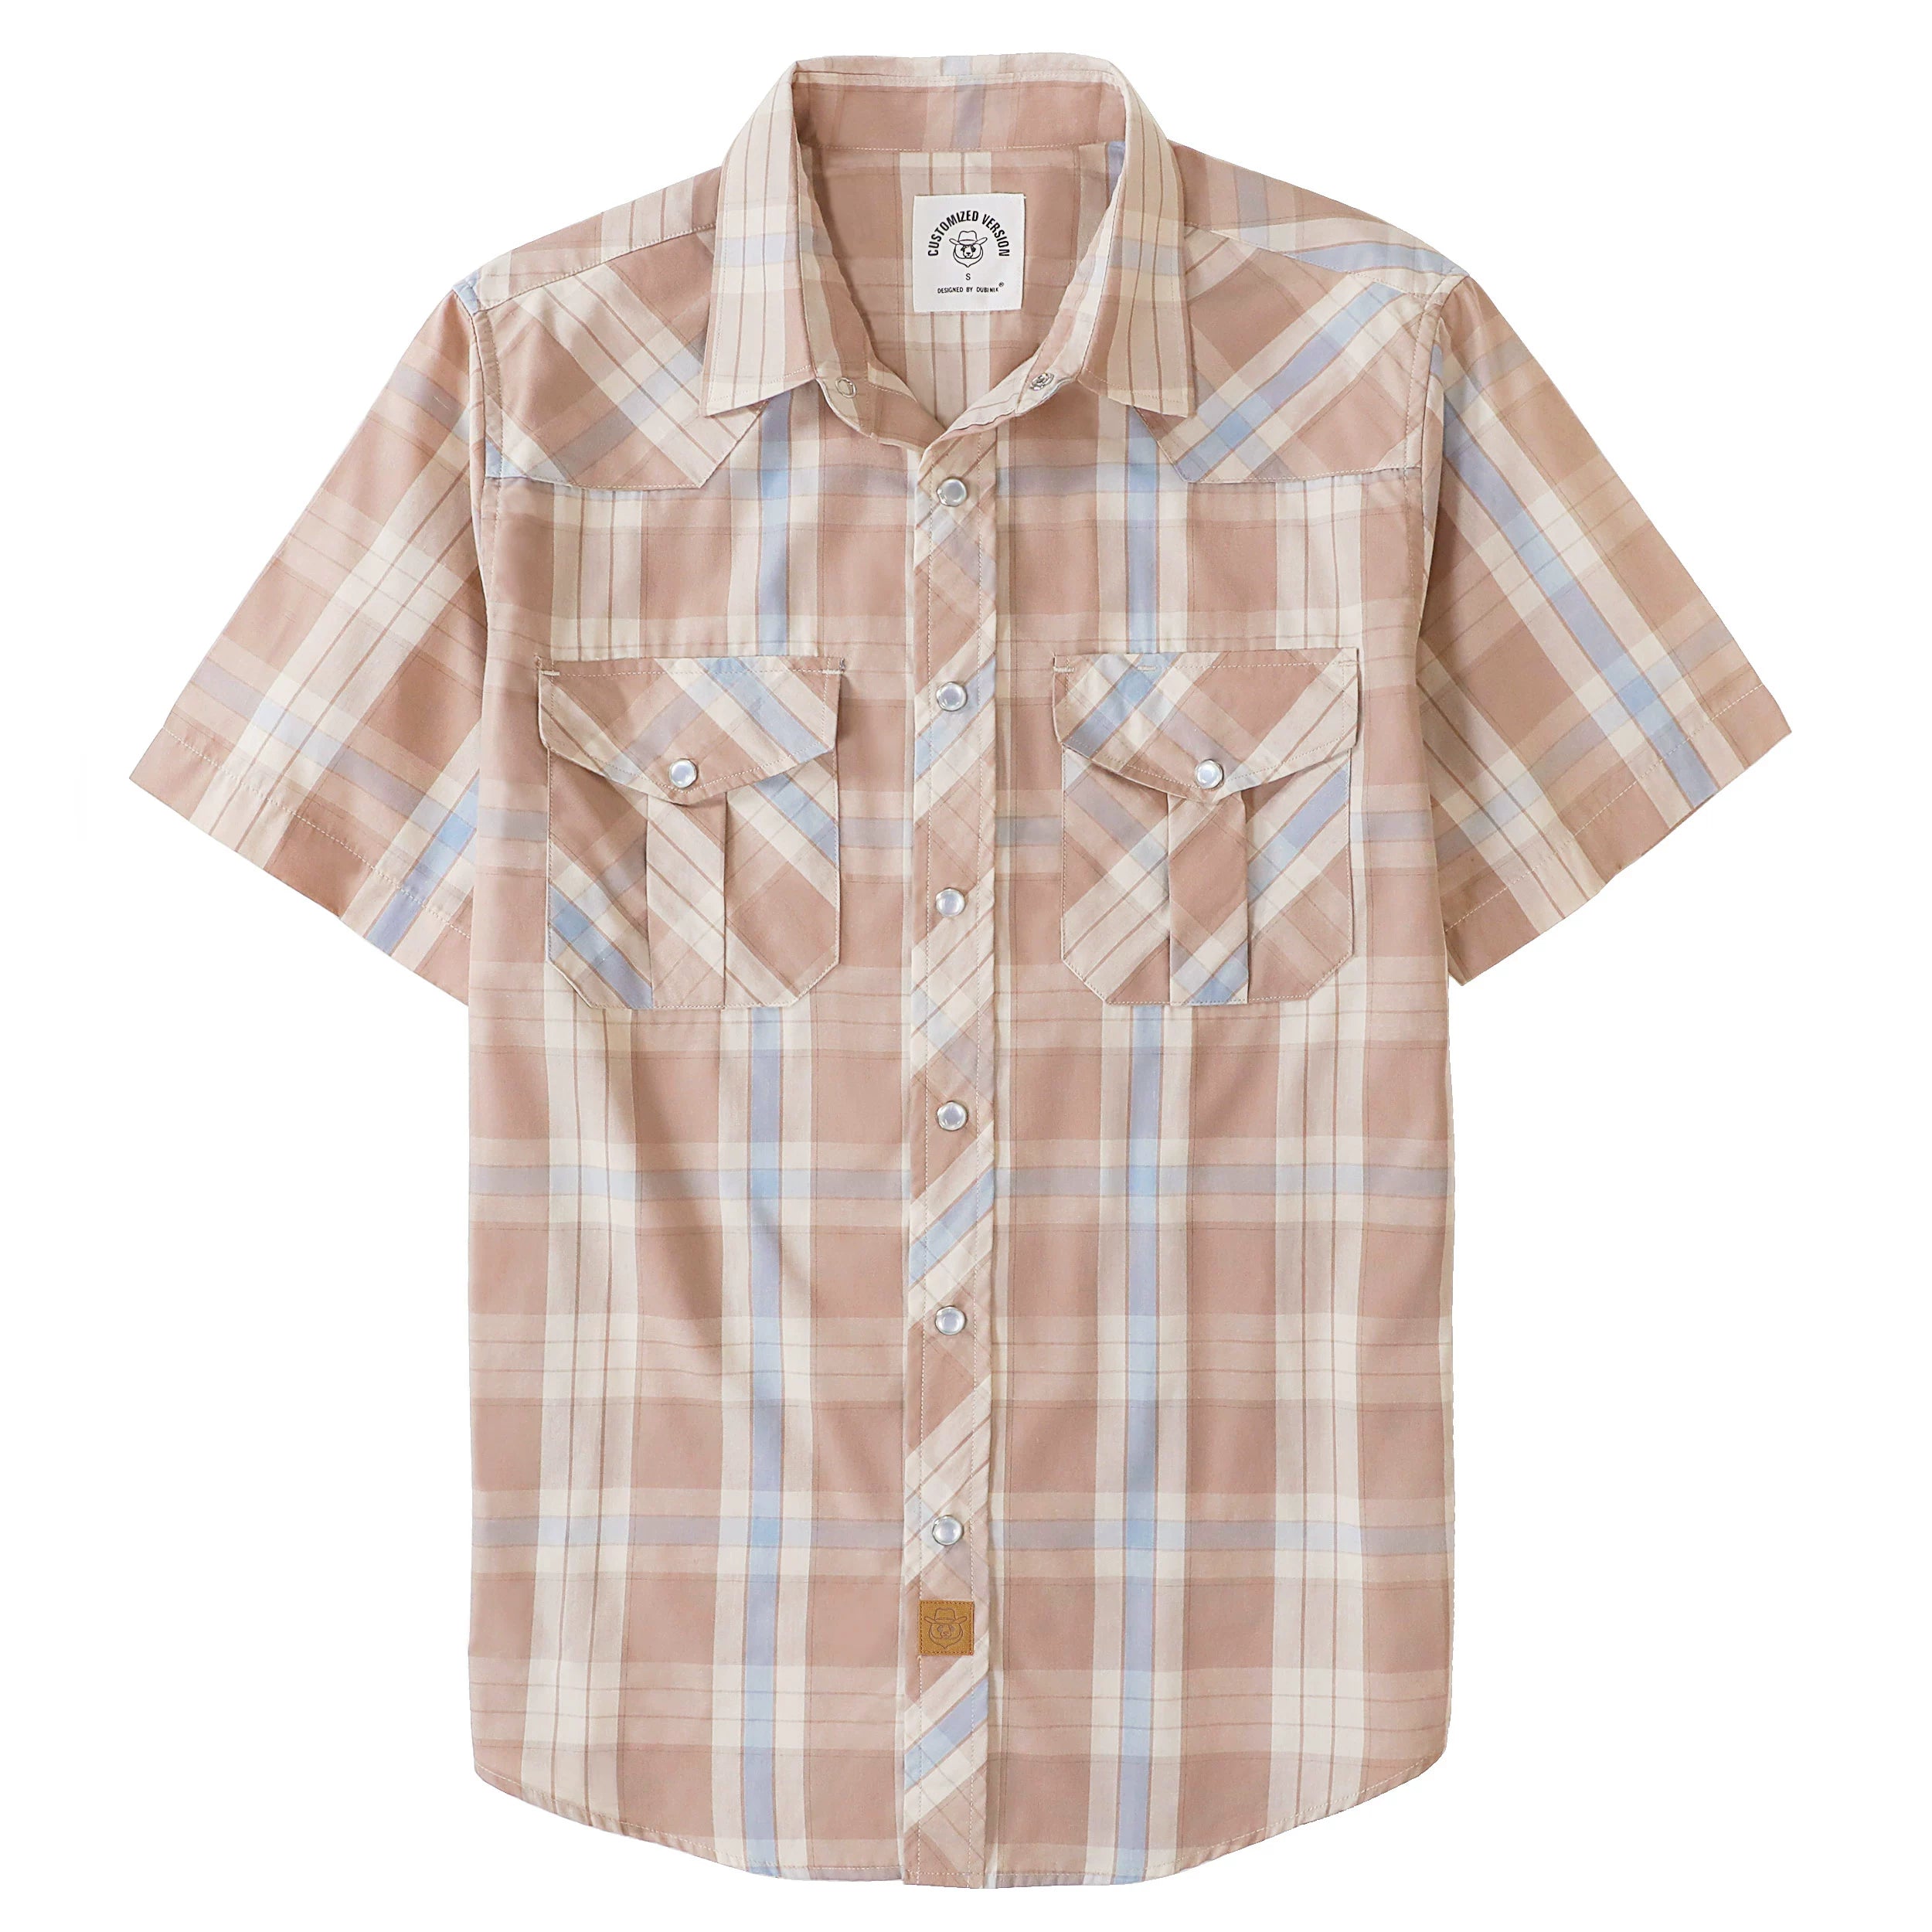 Dubinik® Western Shirts for Men Short Sleeve Plaid Pearl Snap Shirts for Men Button Up Shirt Cowboy Casual Work Shirt#41029